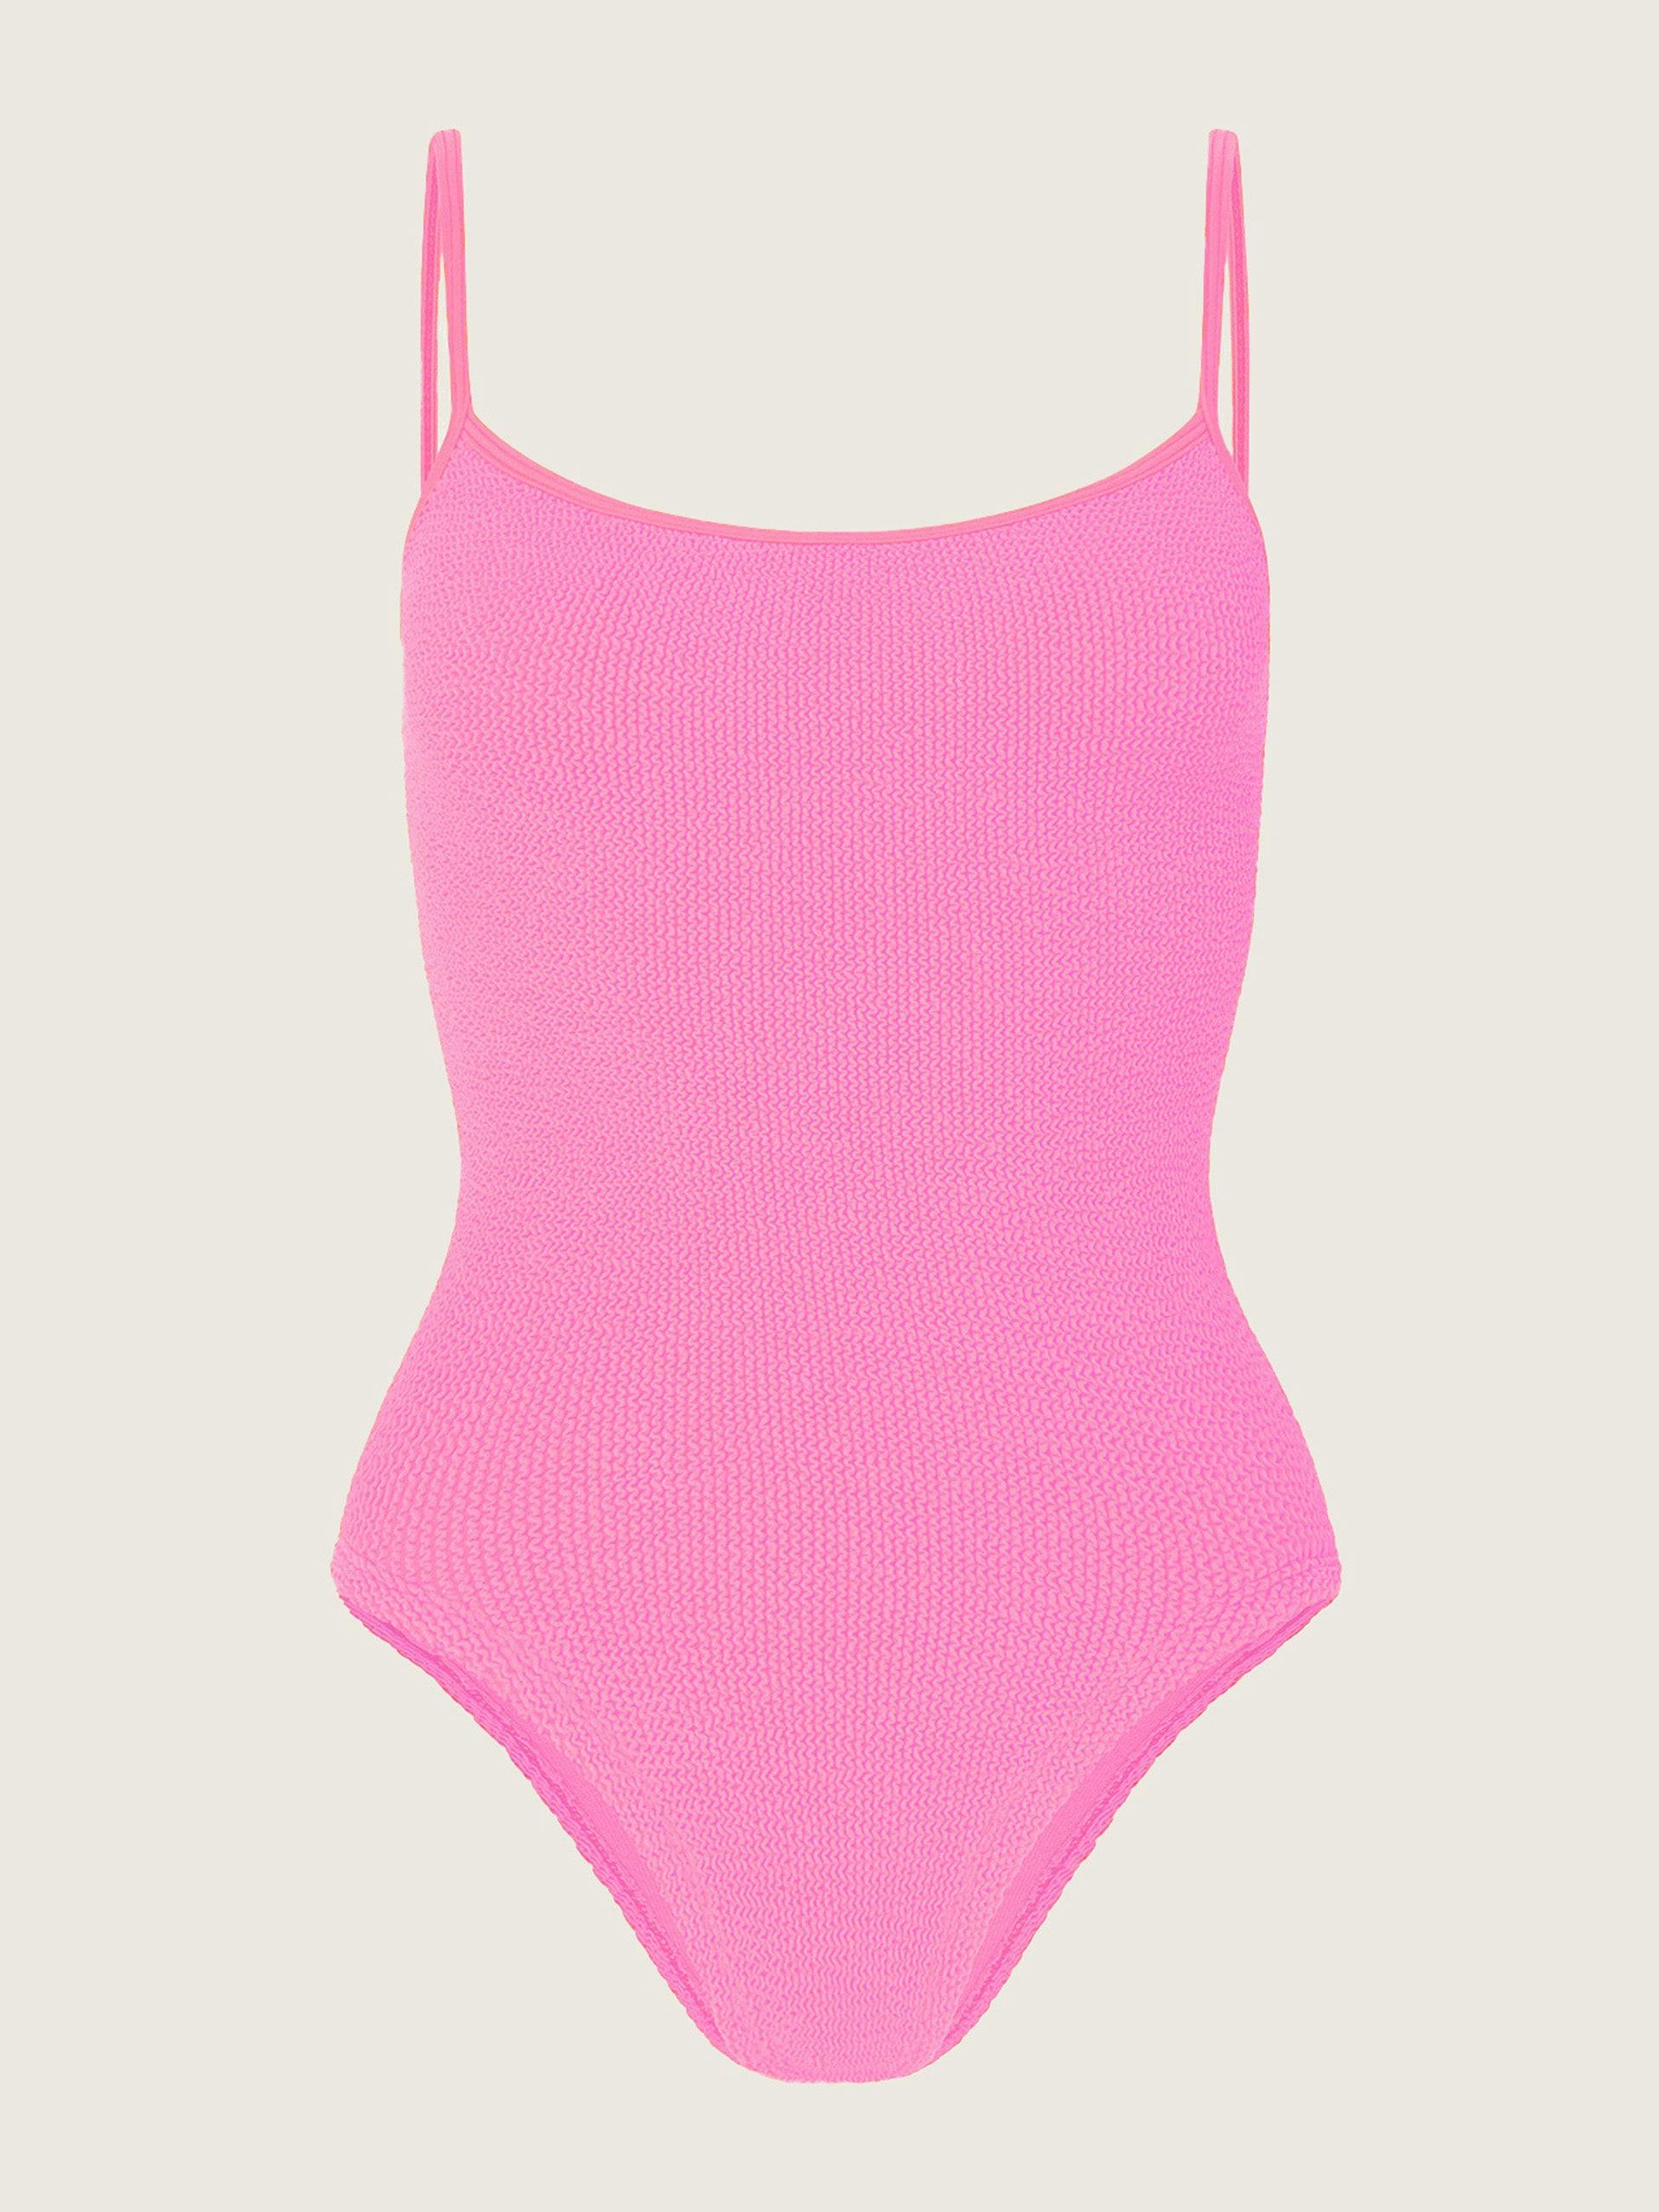 Bubblegum pink spaghetti strap Pamela swimsuit